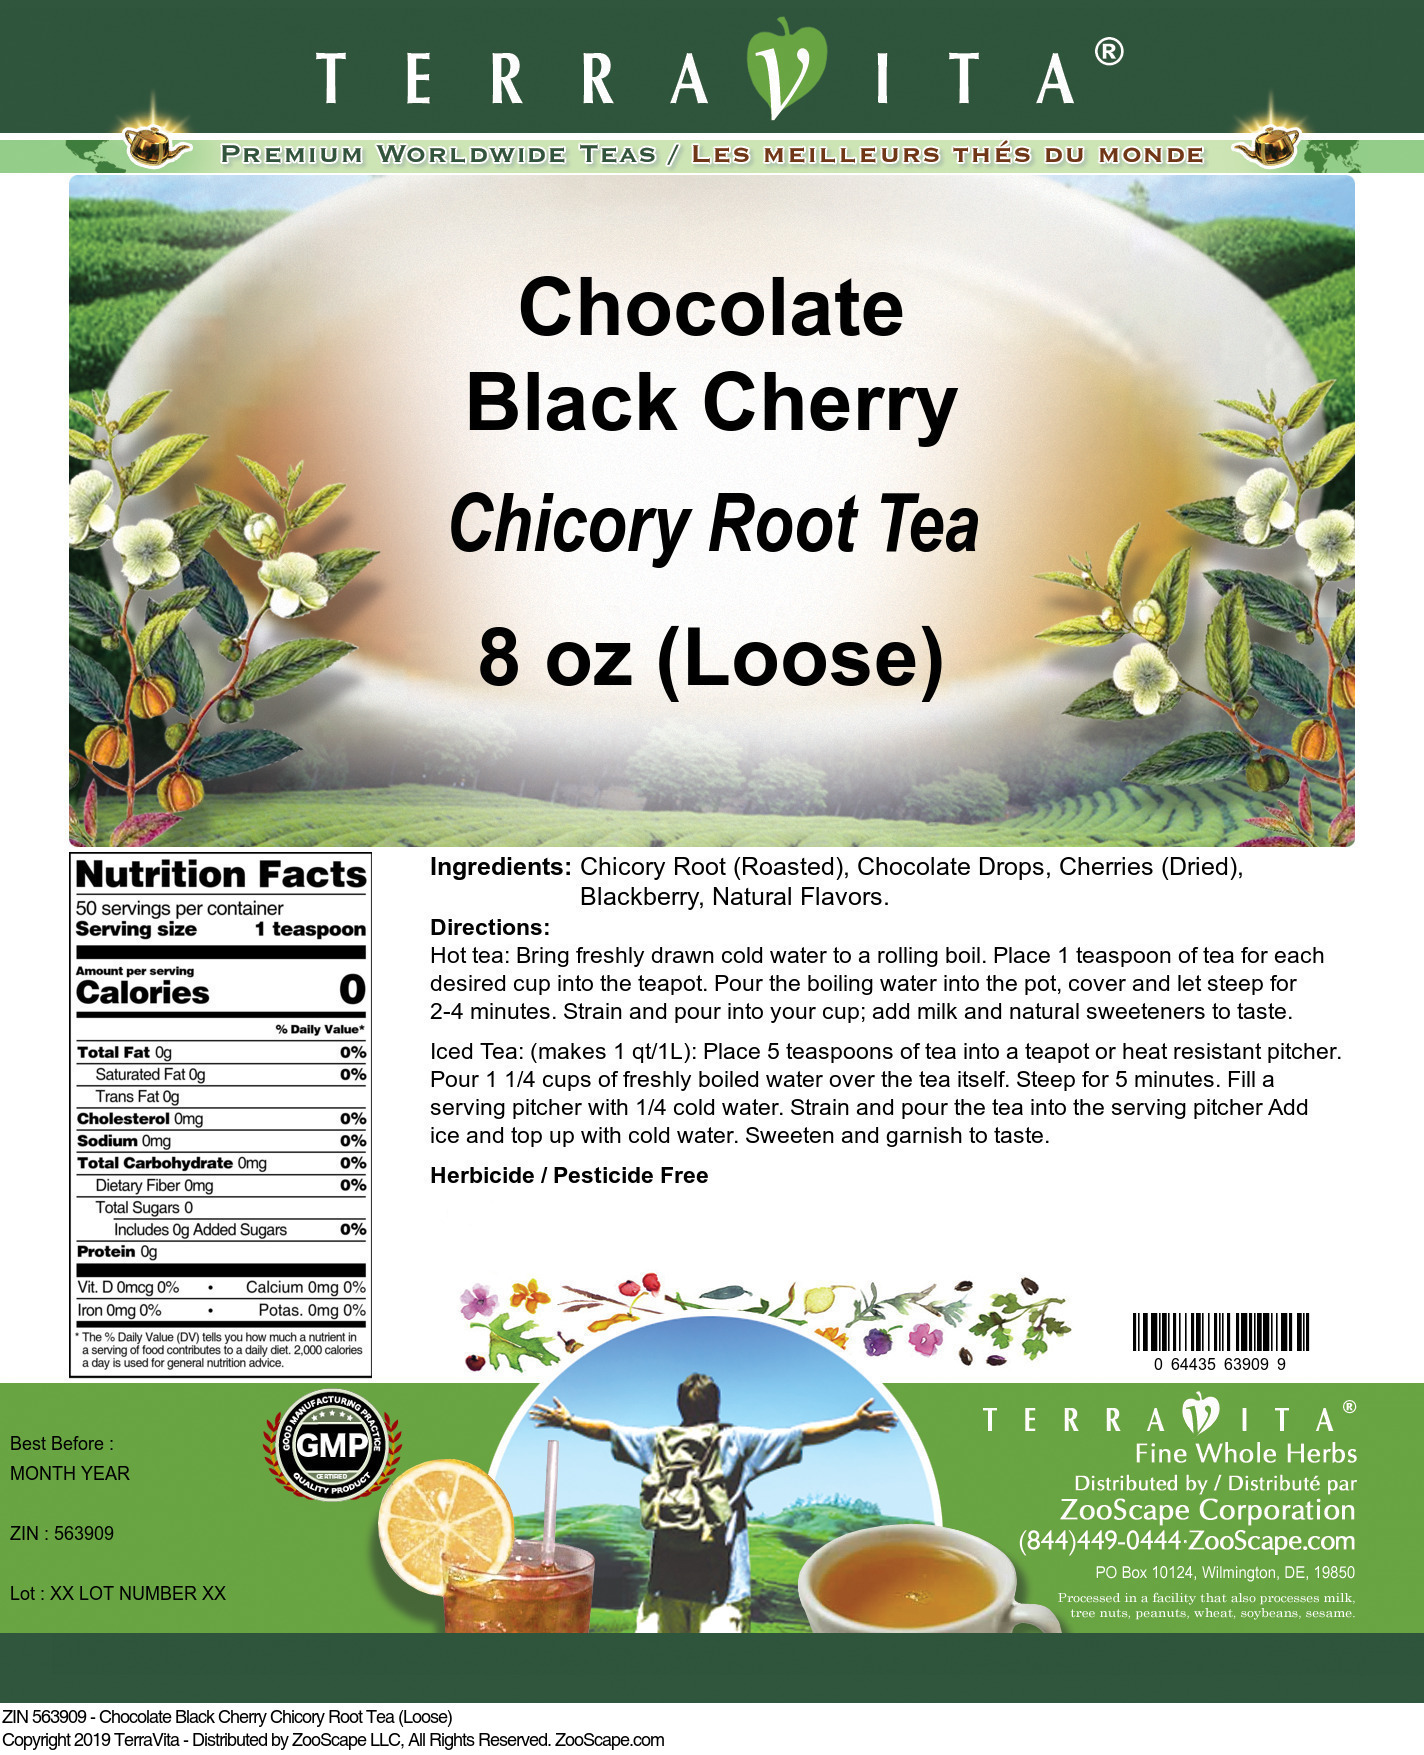 Chocolate Black Cherry Chicory Root Tea (Loose) - Label